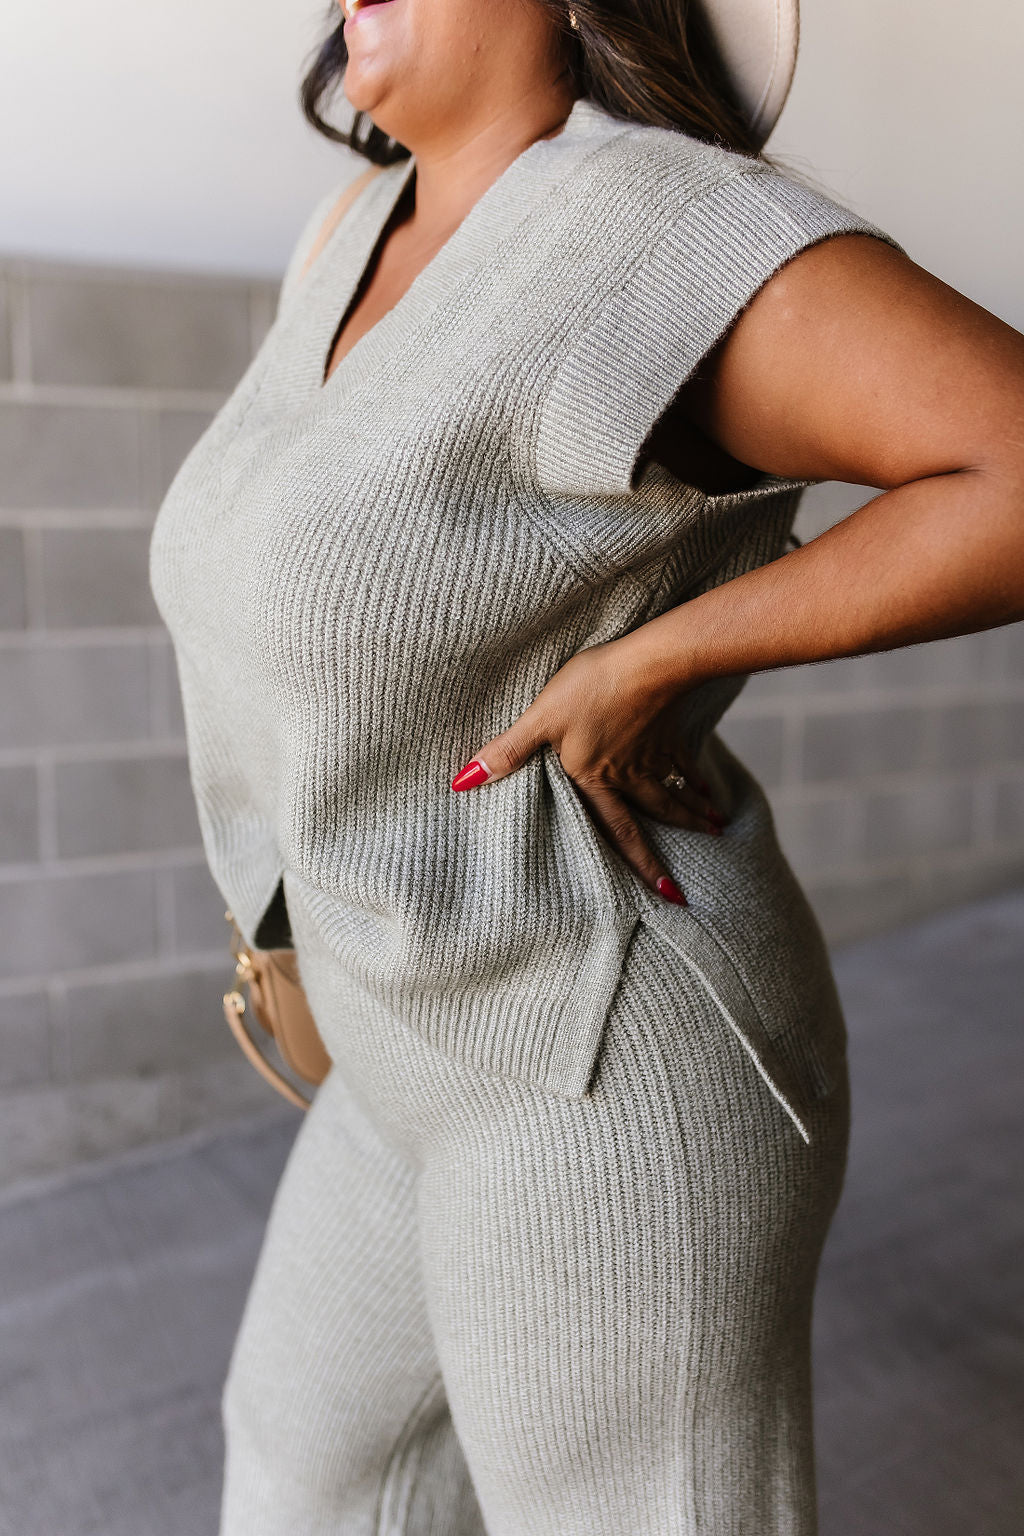 Caroline Sweater Tank - Mindy Mae's Marketcomfy cute hoodies